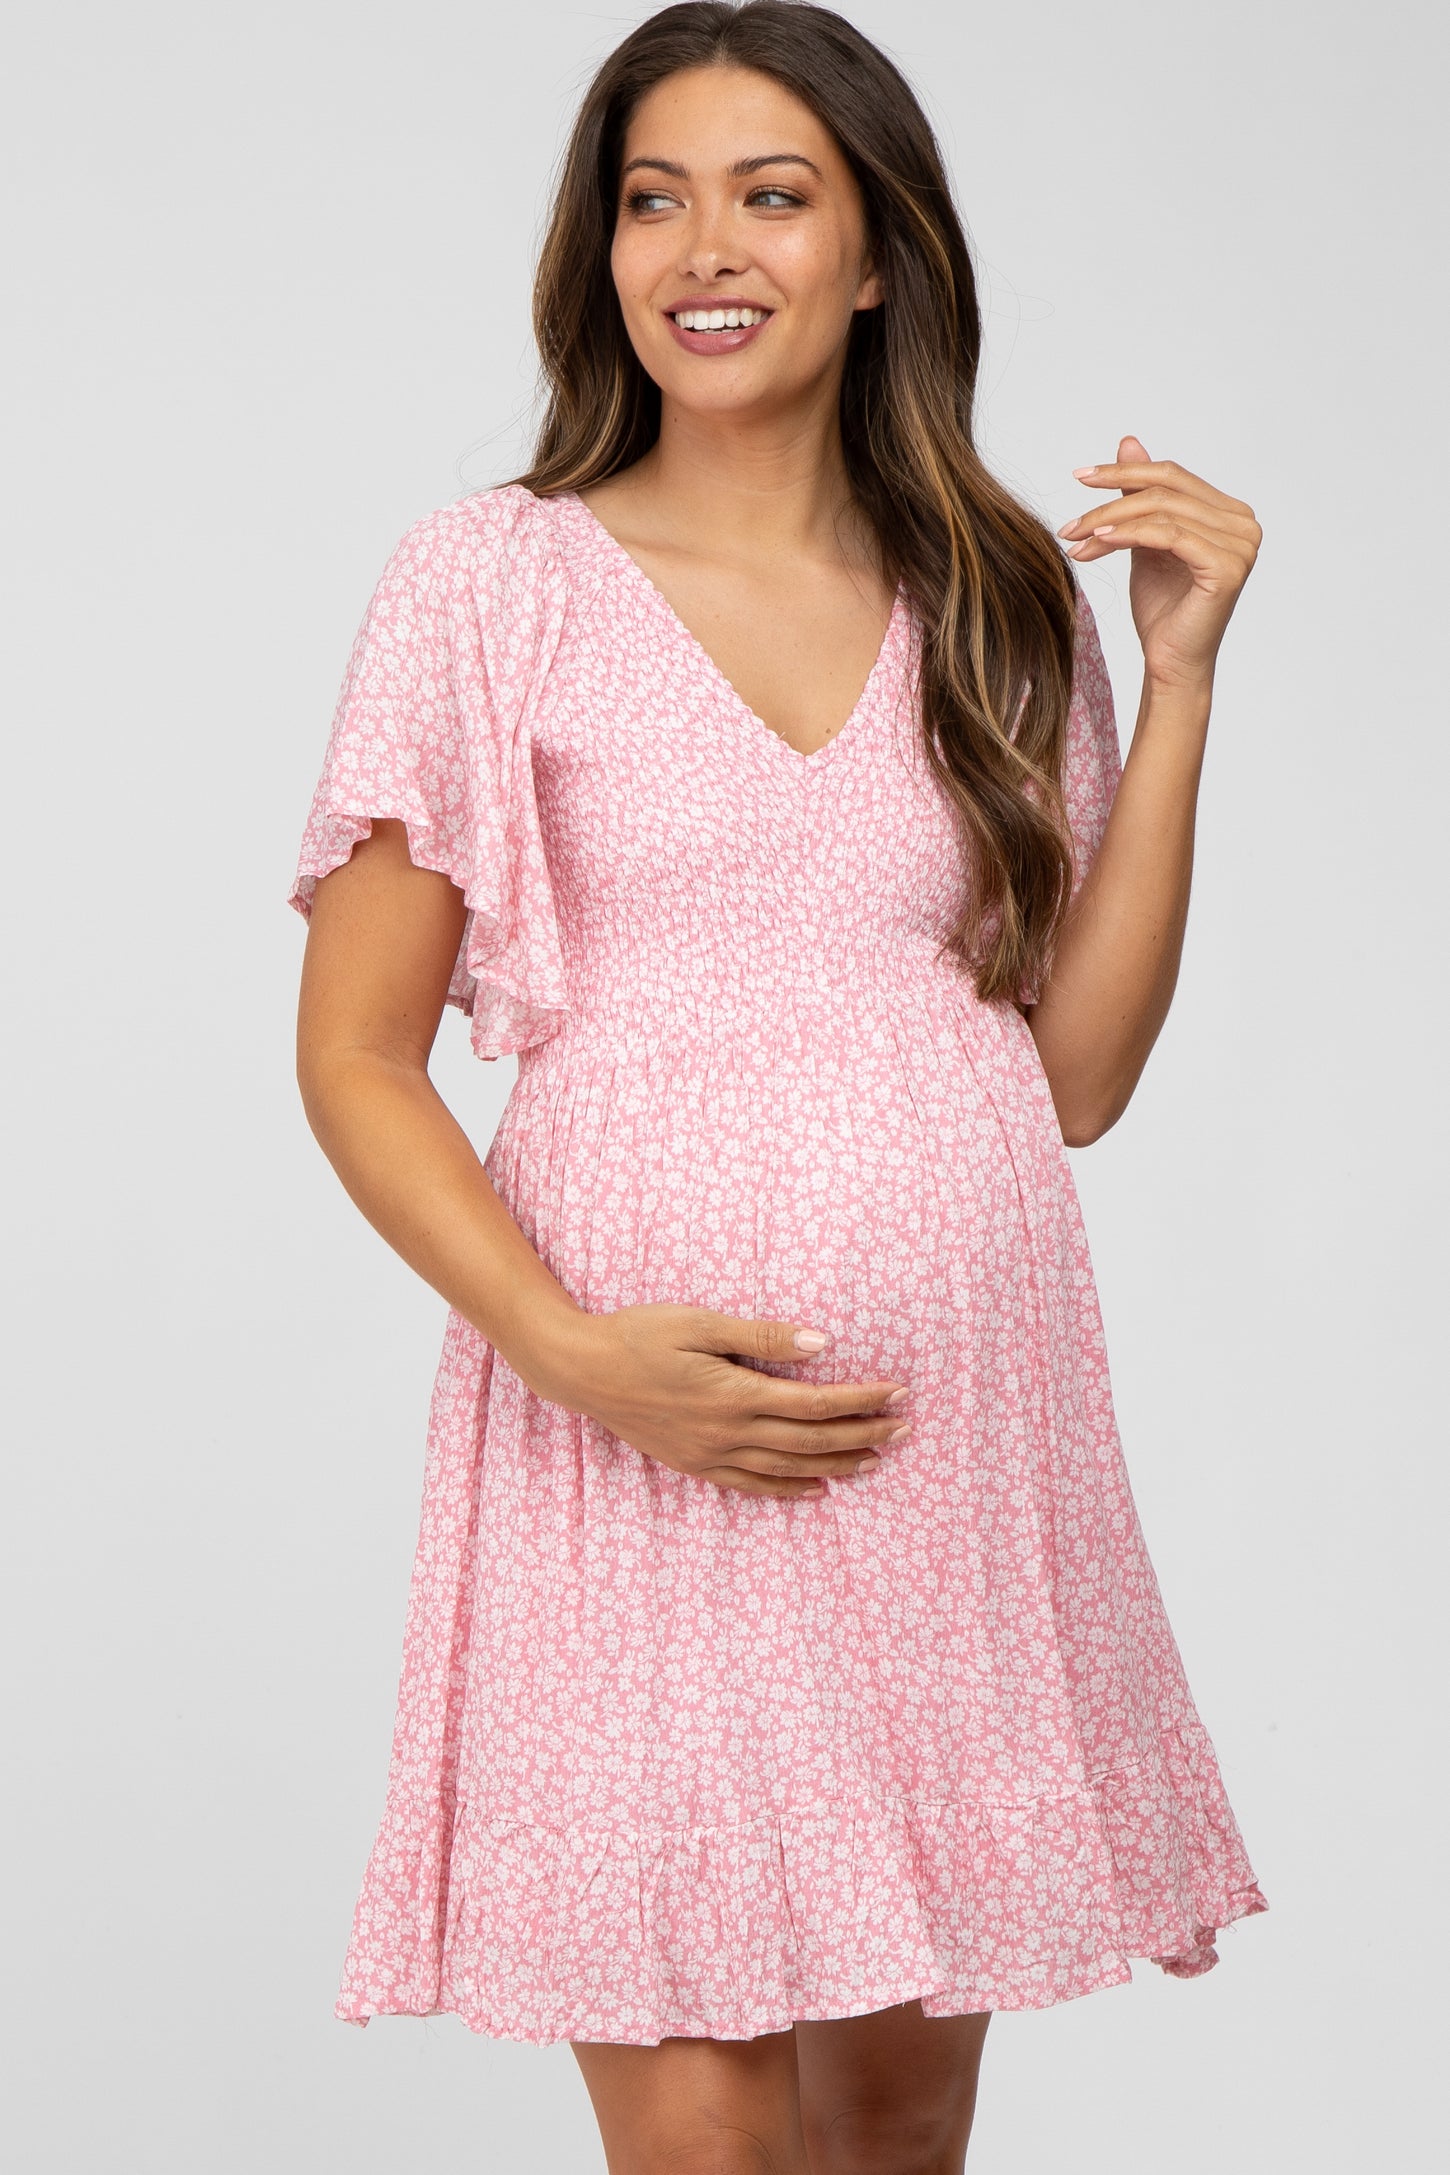 Shop Fashion Pink Maternity Dresses For Sale, Pink Short Print